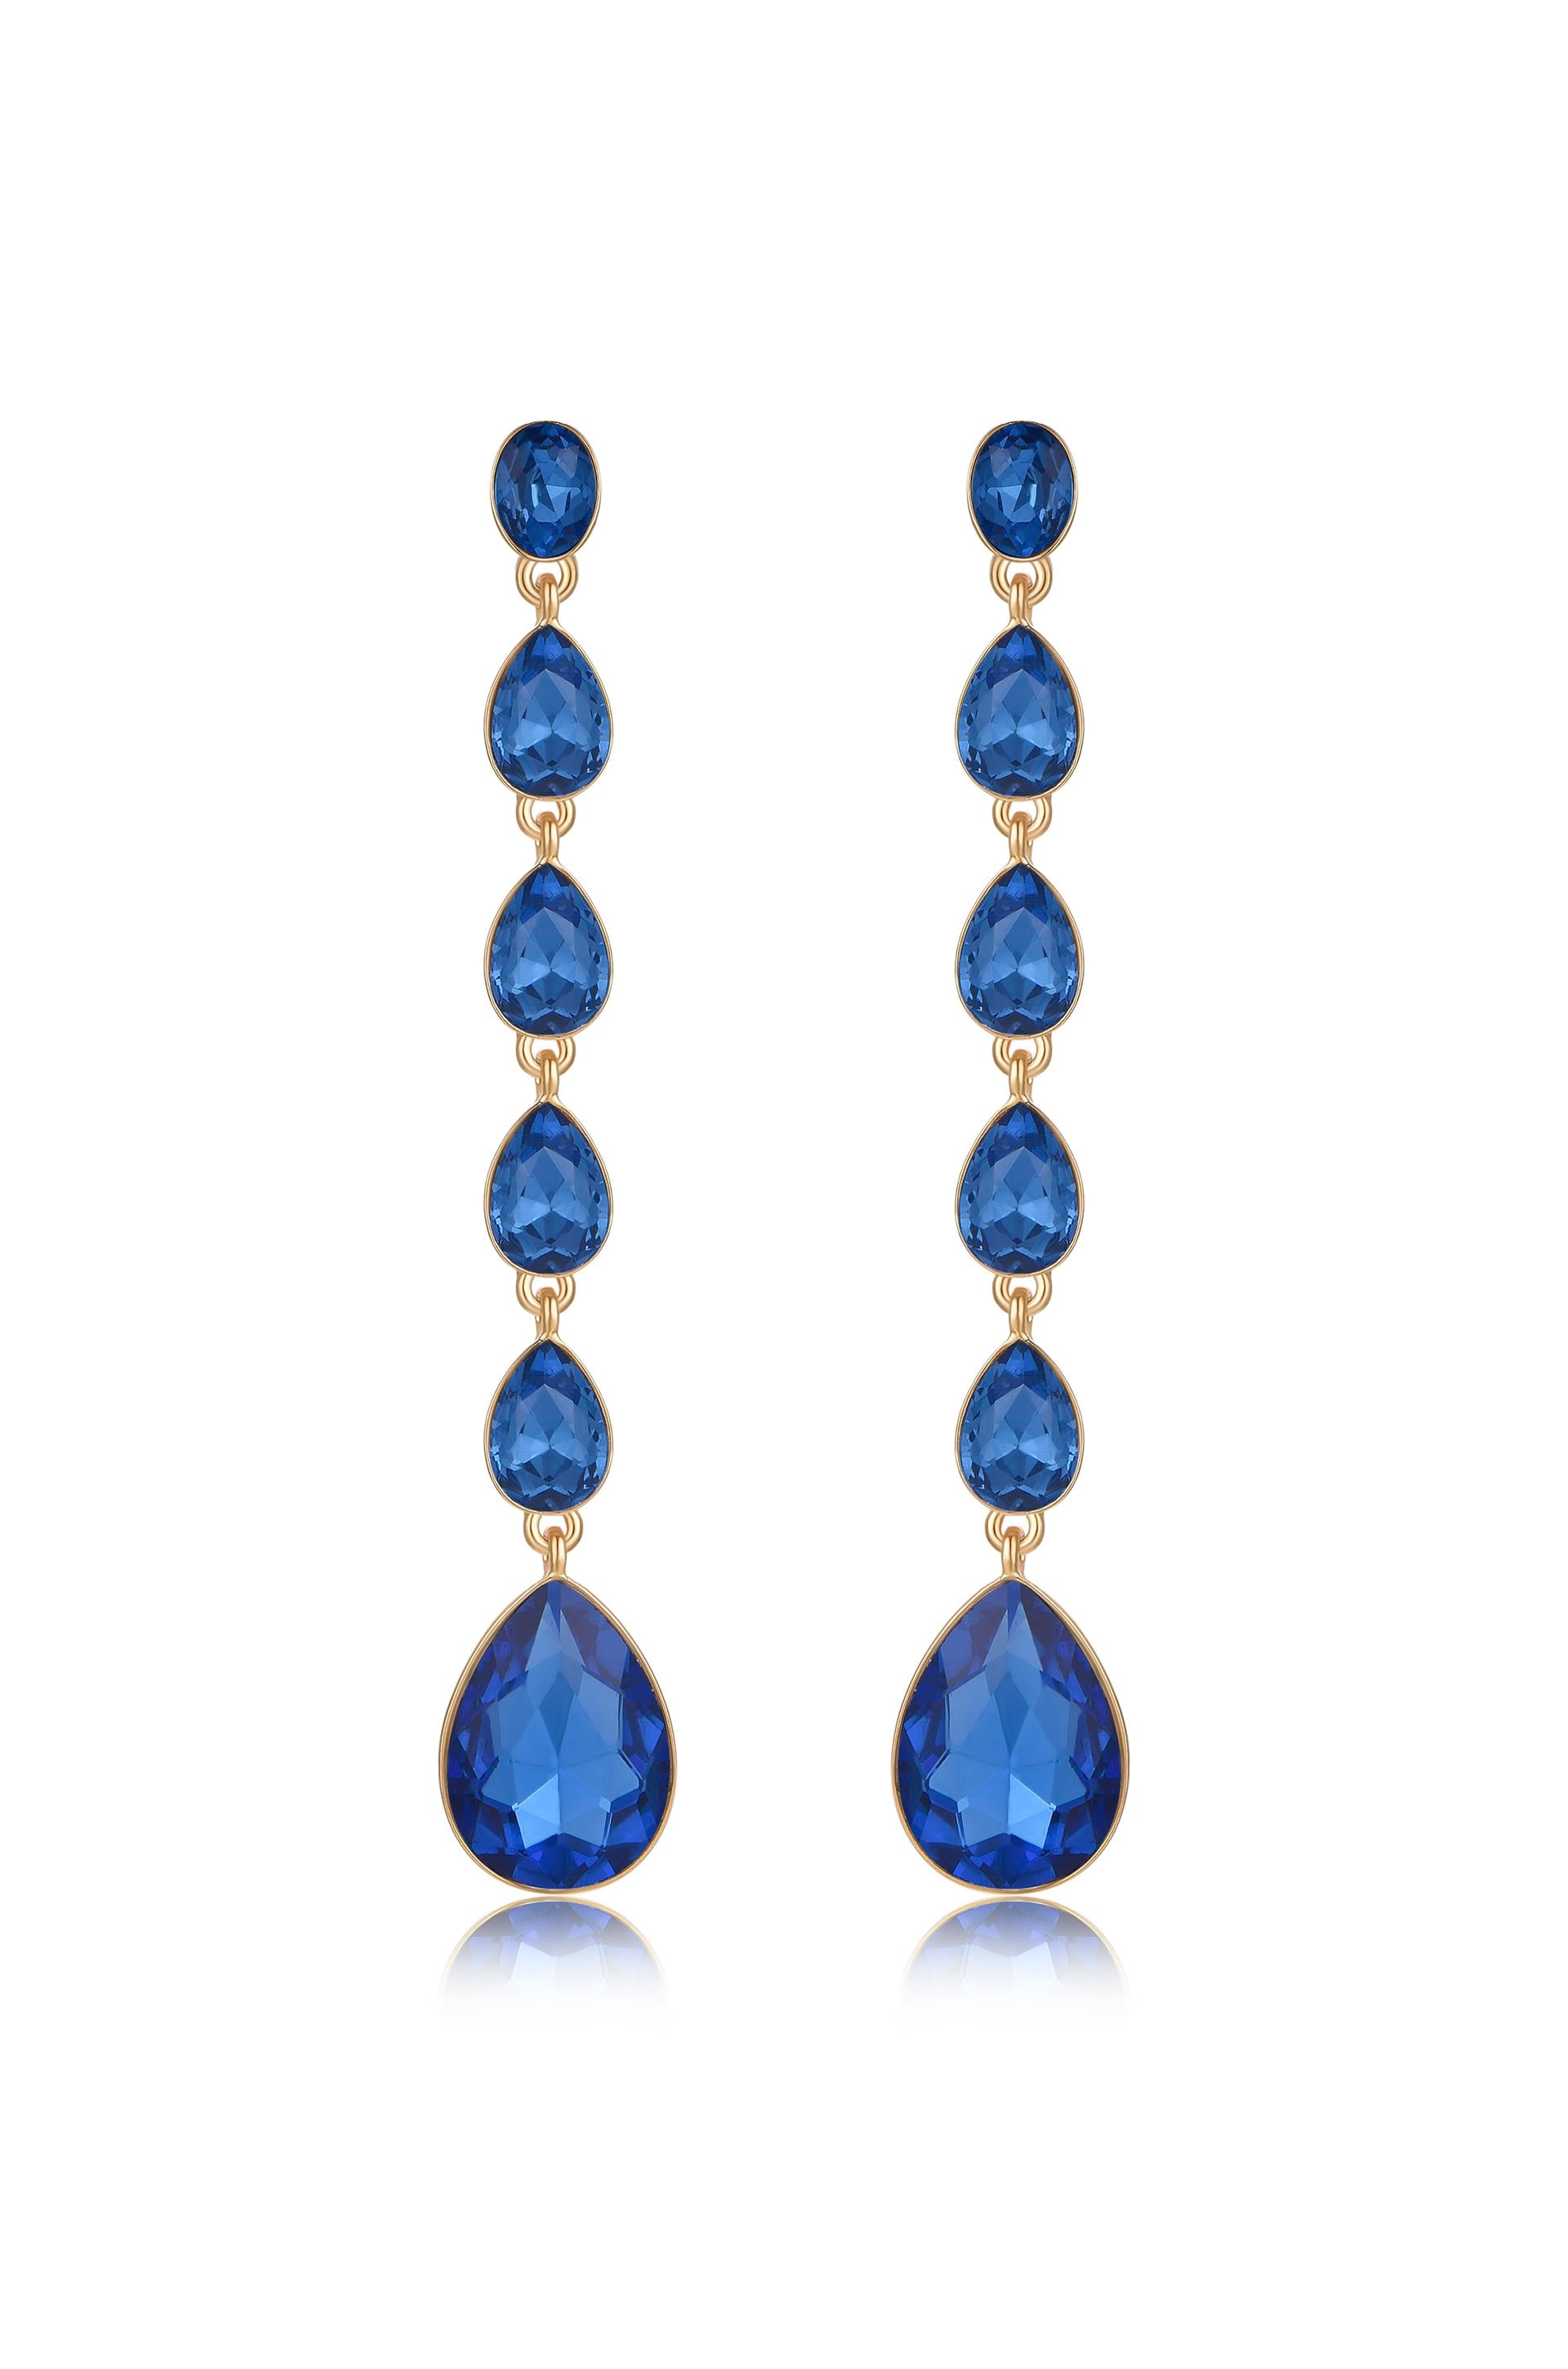 Best Day Crystal & Pearl 18k Gold Plated Earrings – Ettika